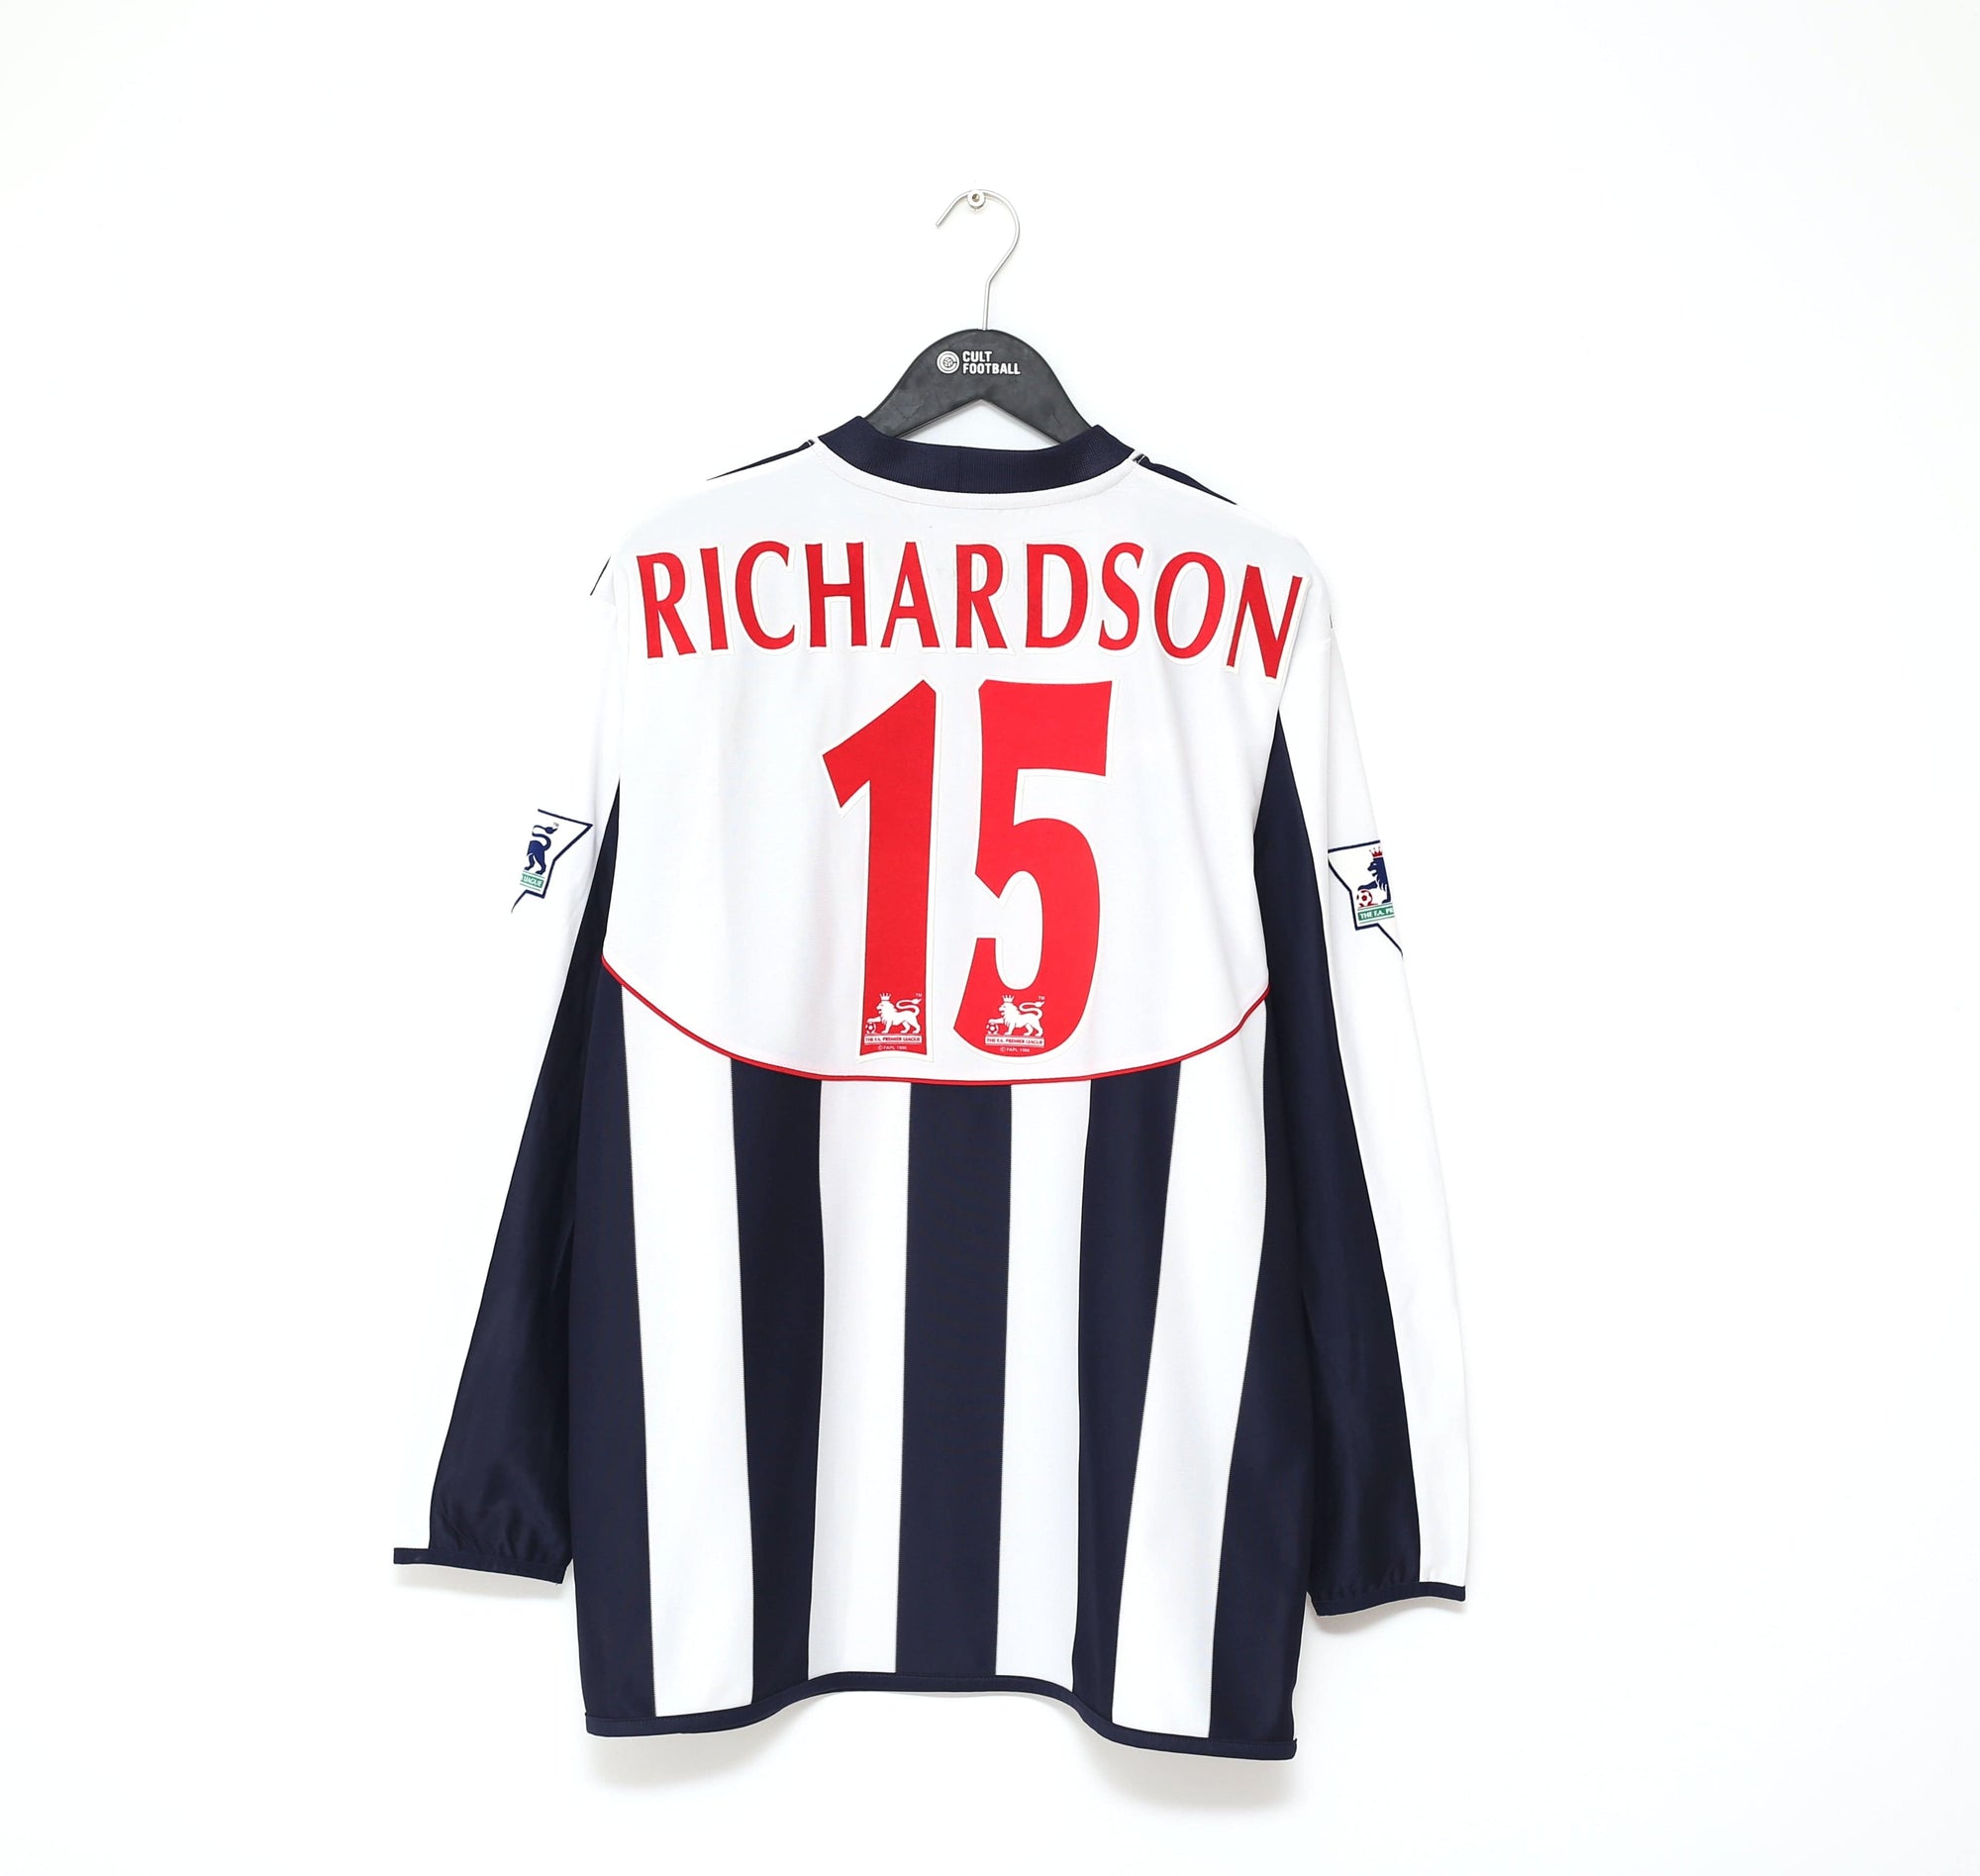 2004/05 RICHARDSON #15 MATCH WORN West Brom Vintage Diadora Football Shirt (L)